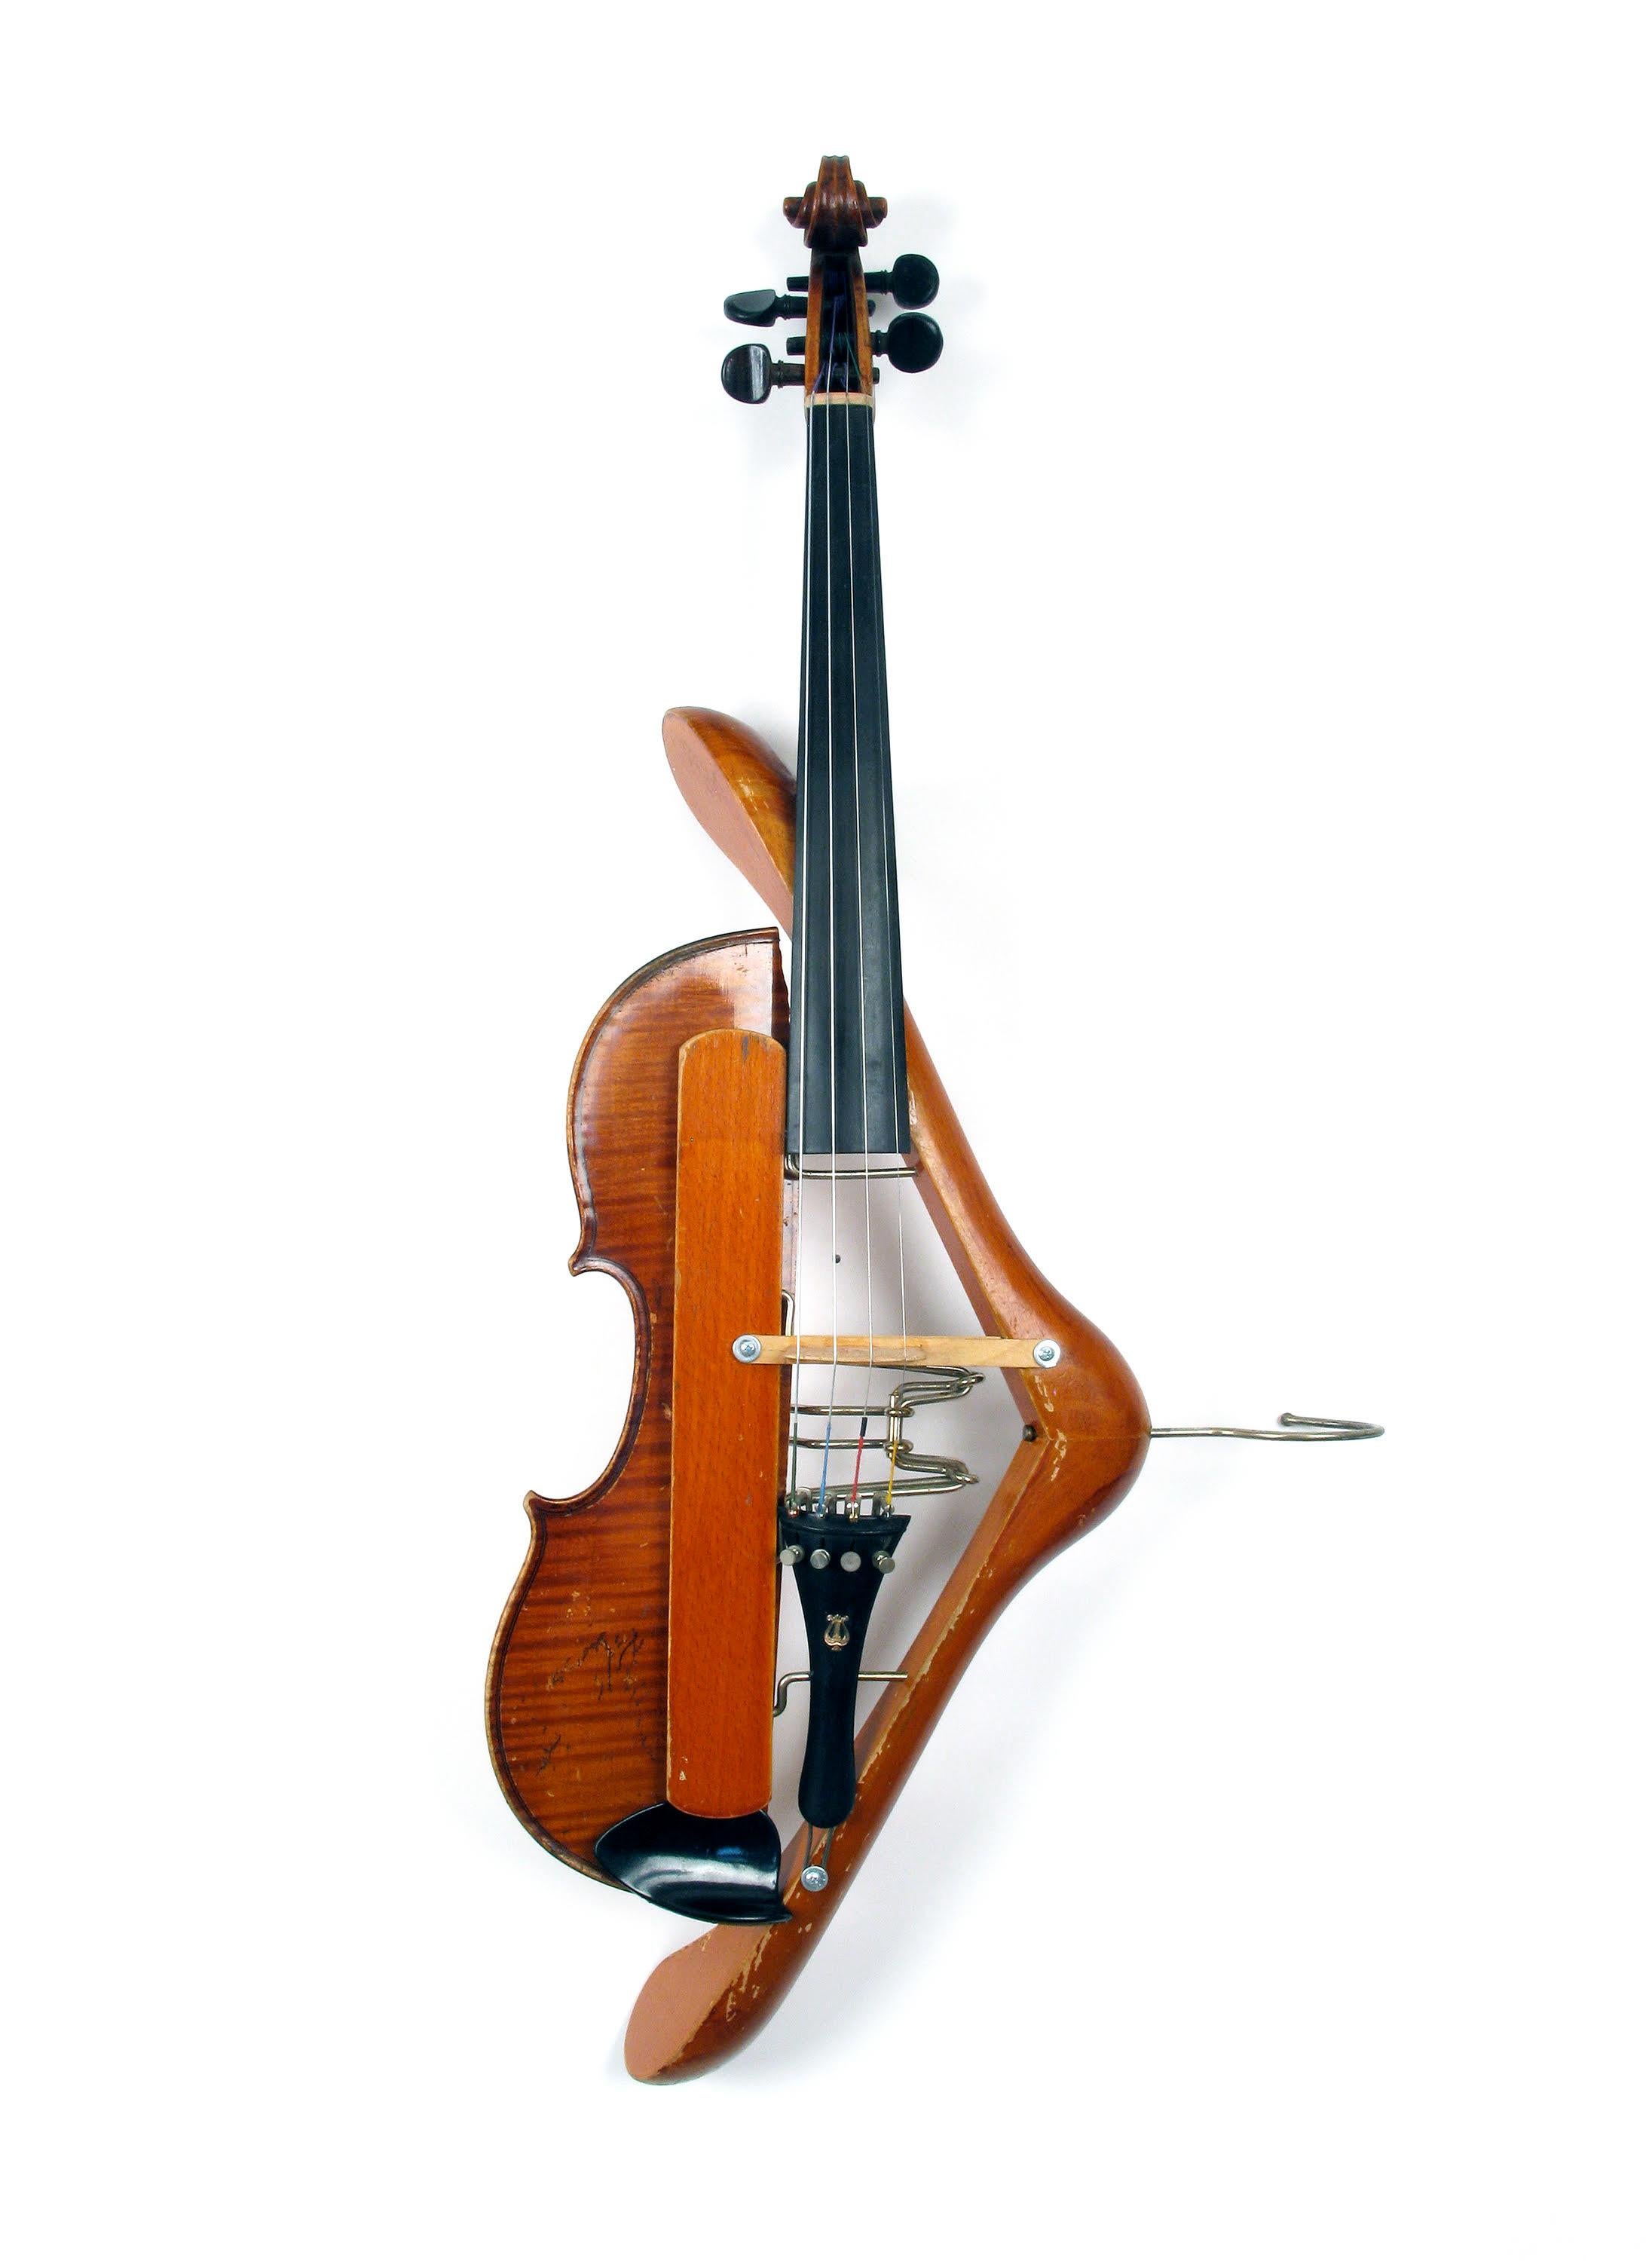 Ken Butler Abstract Sculpture - "Coat Hanger Violin"  hybrid musical instrument sculpture, assemblage